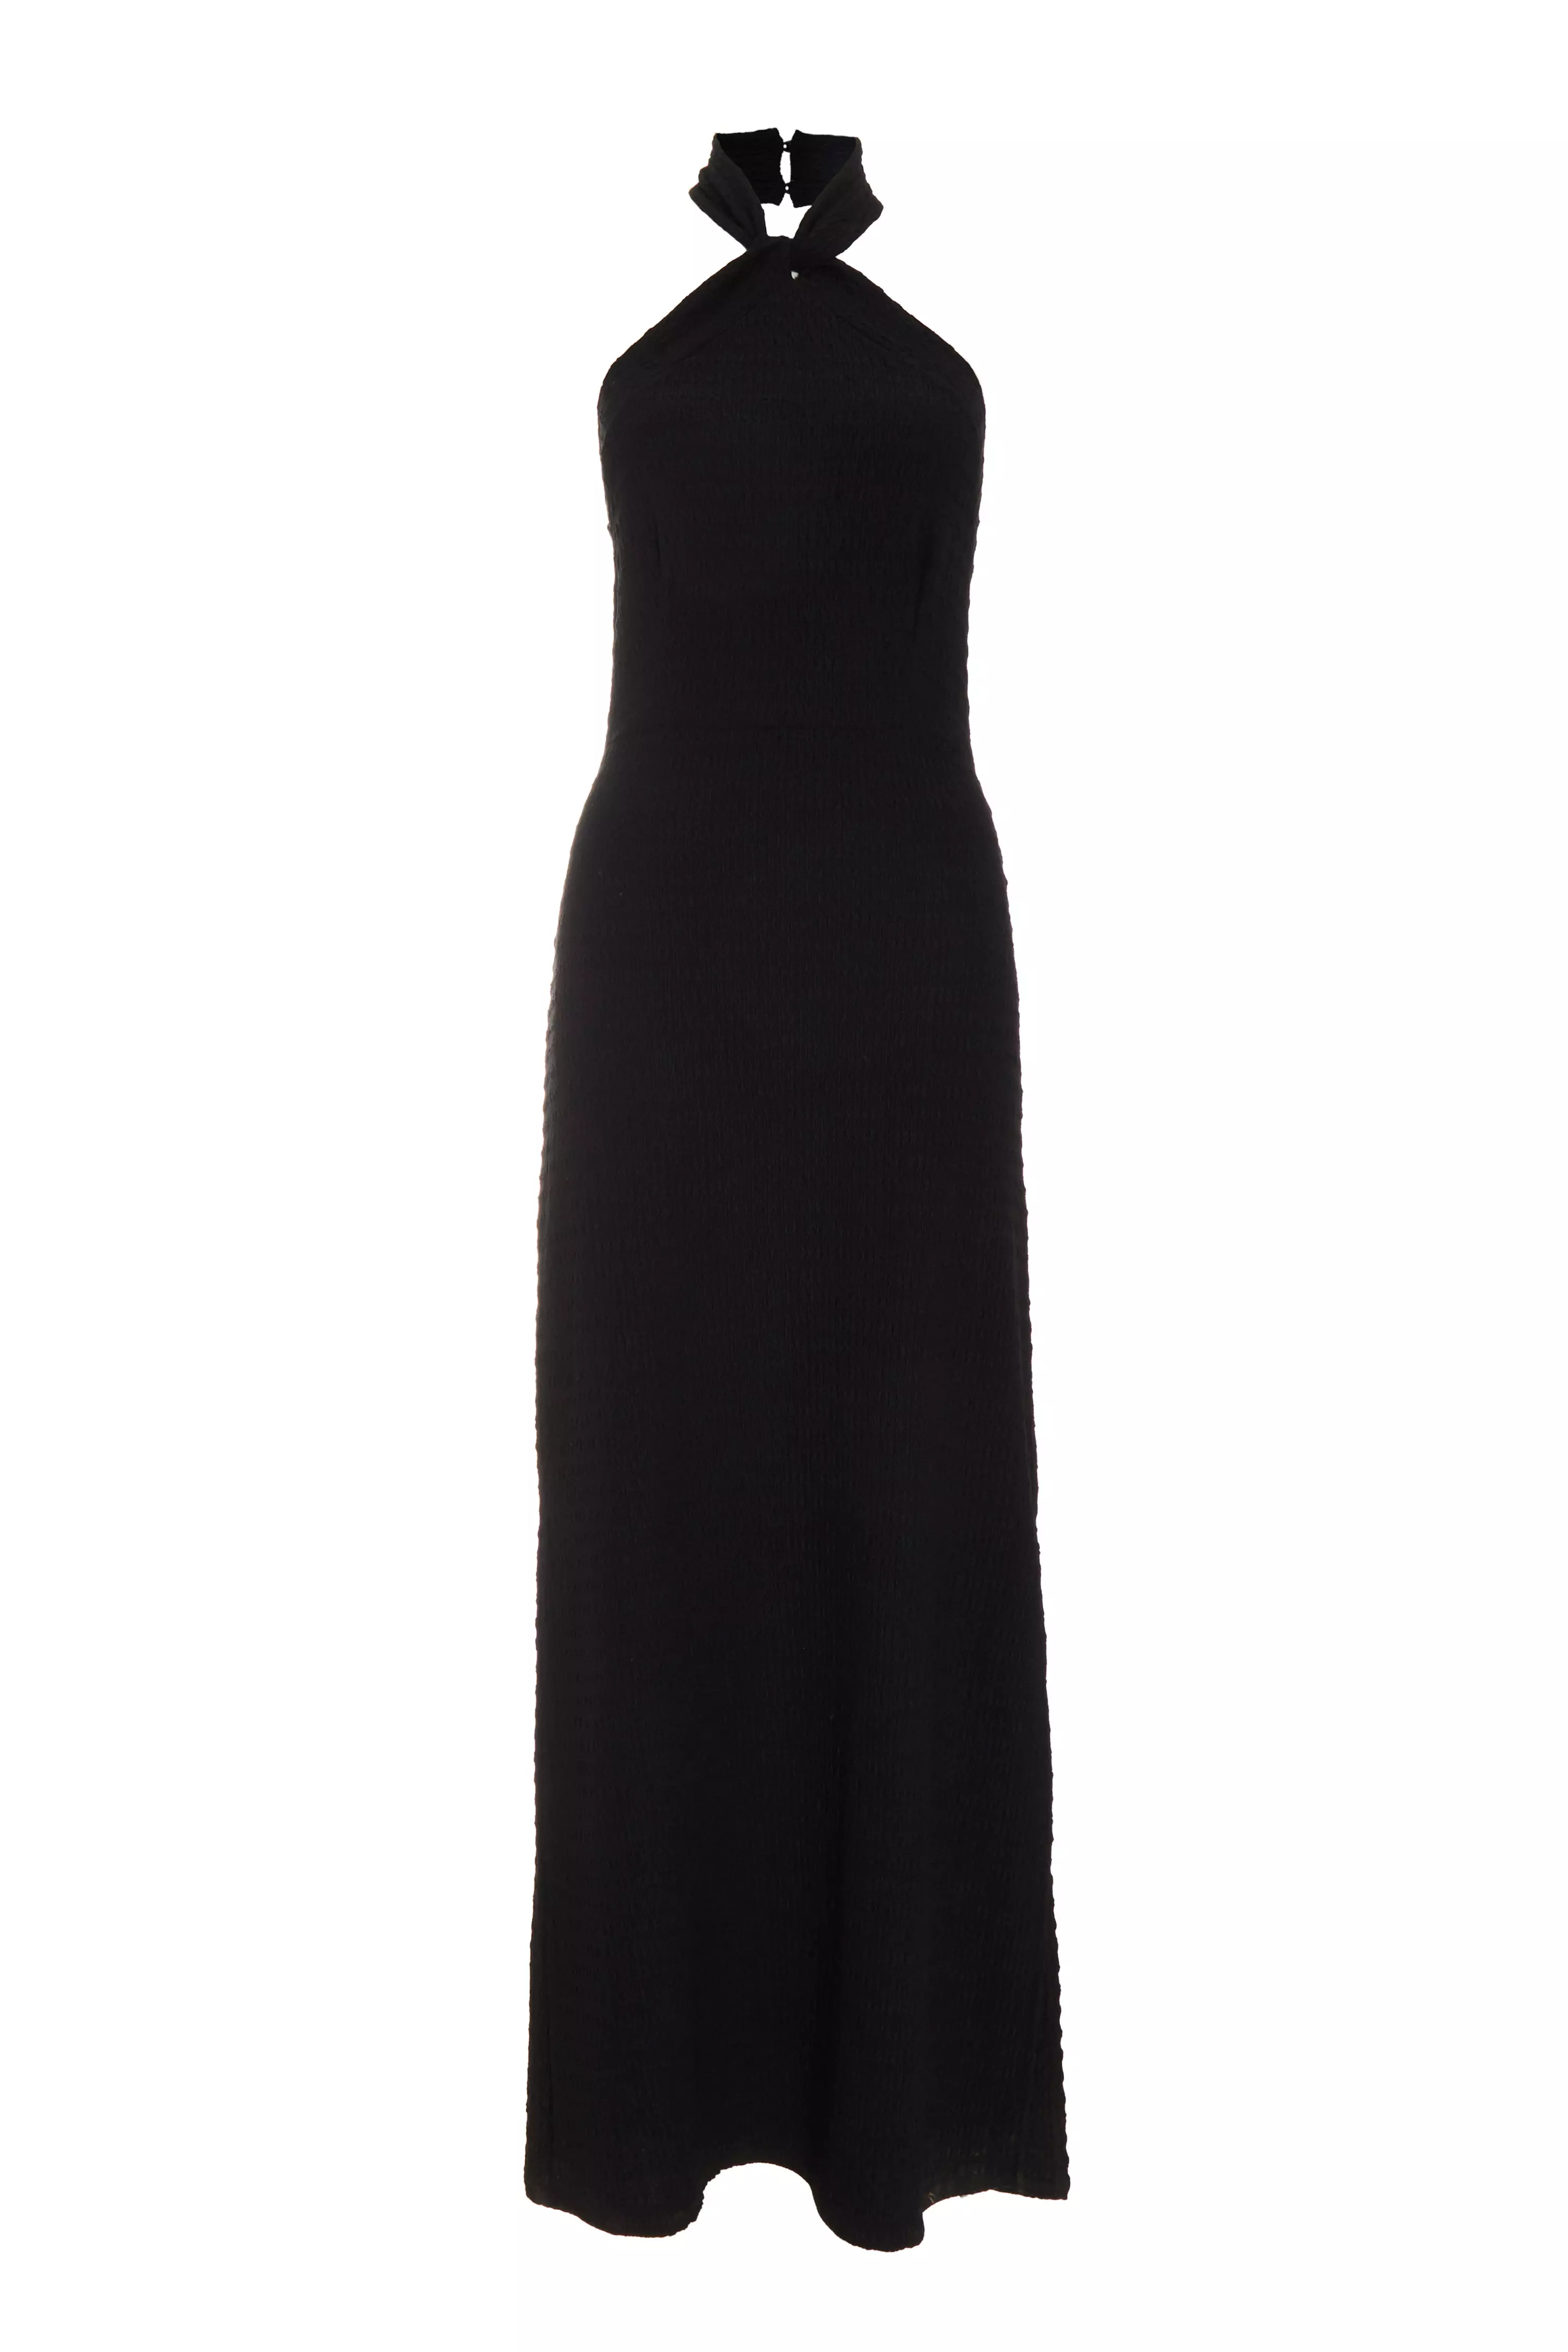 Petite Black Halterneck Textured Maxi Dress - QUIZ Clothing